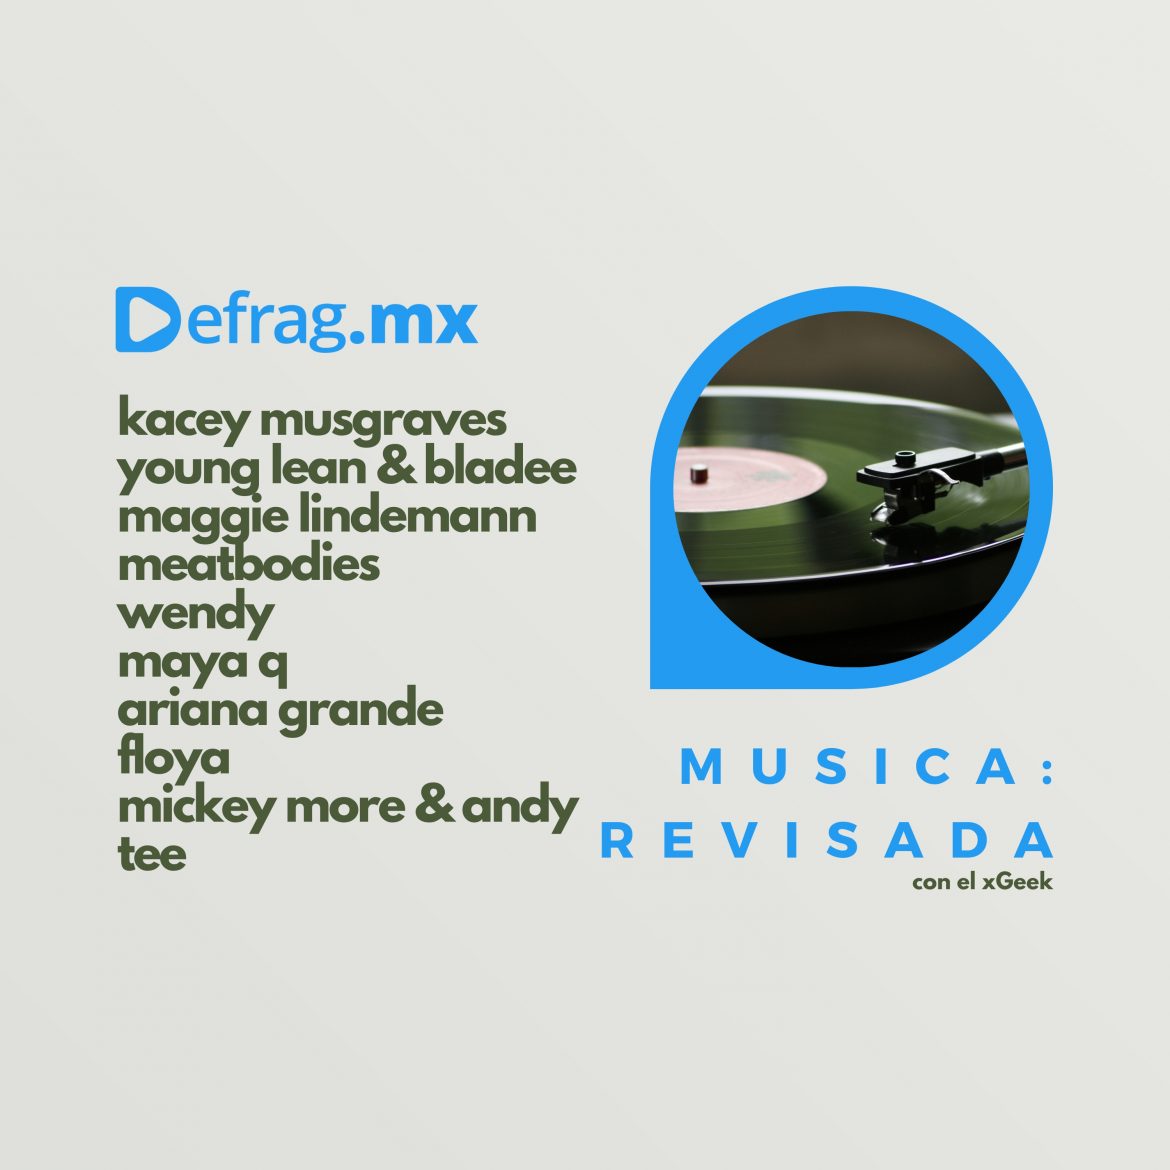 Defrag.mx Podcast Música Revisada ・Kacey Musgraves ・ Maggie Lindemann ・ WENDY ・ FLOYA